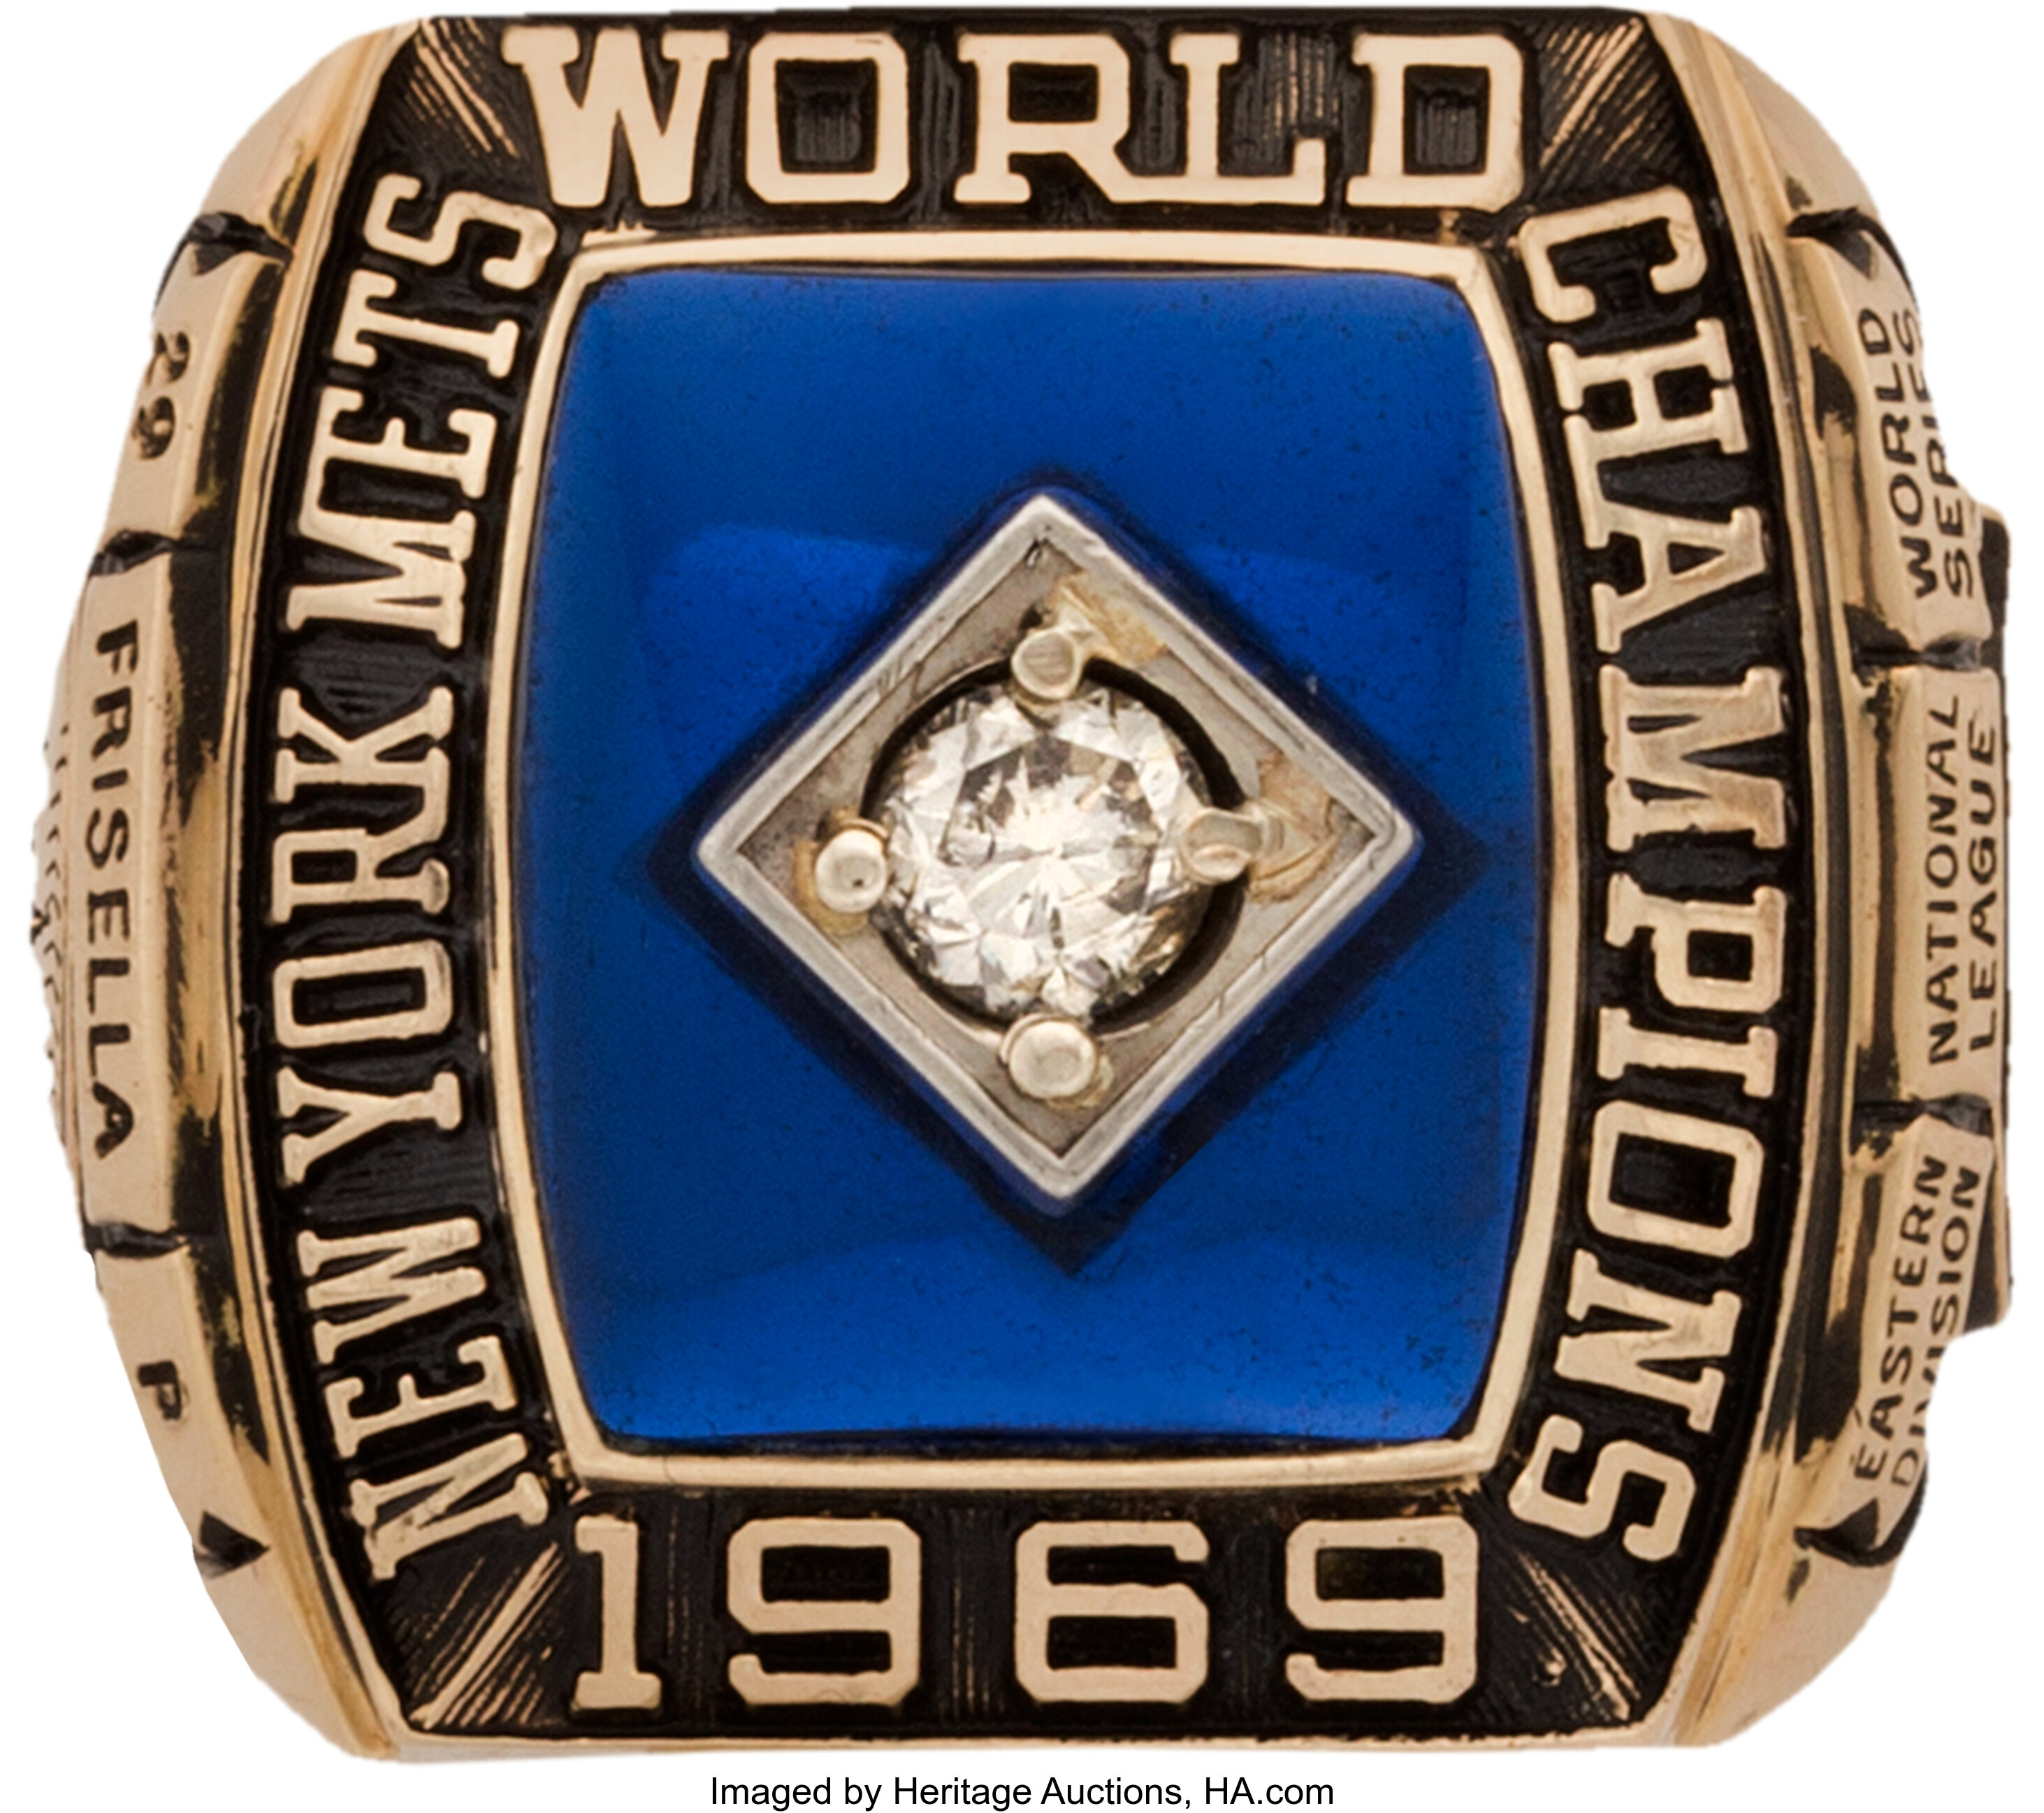 NY METS 1969 WORLD SERIES WHITE JERSEY SGA XL 50 ANNIVERSARY New York MLB